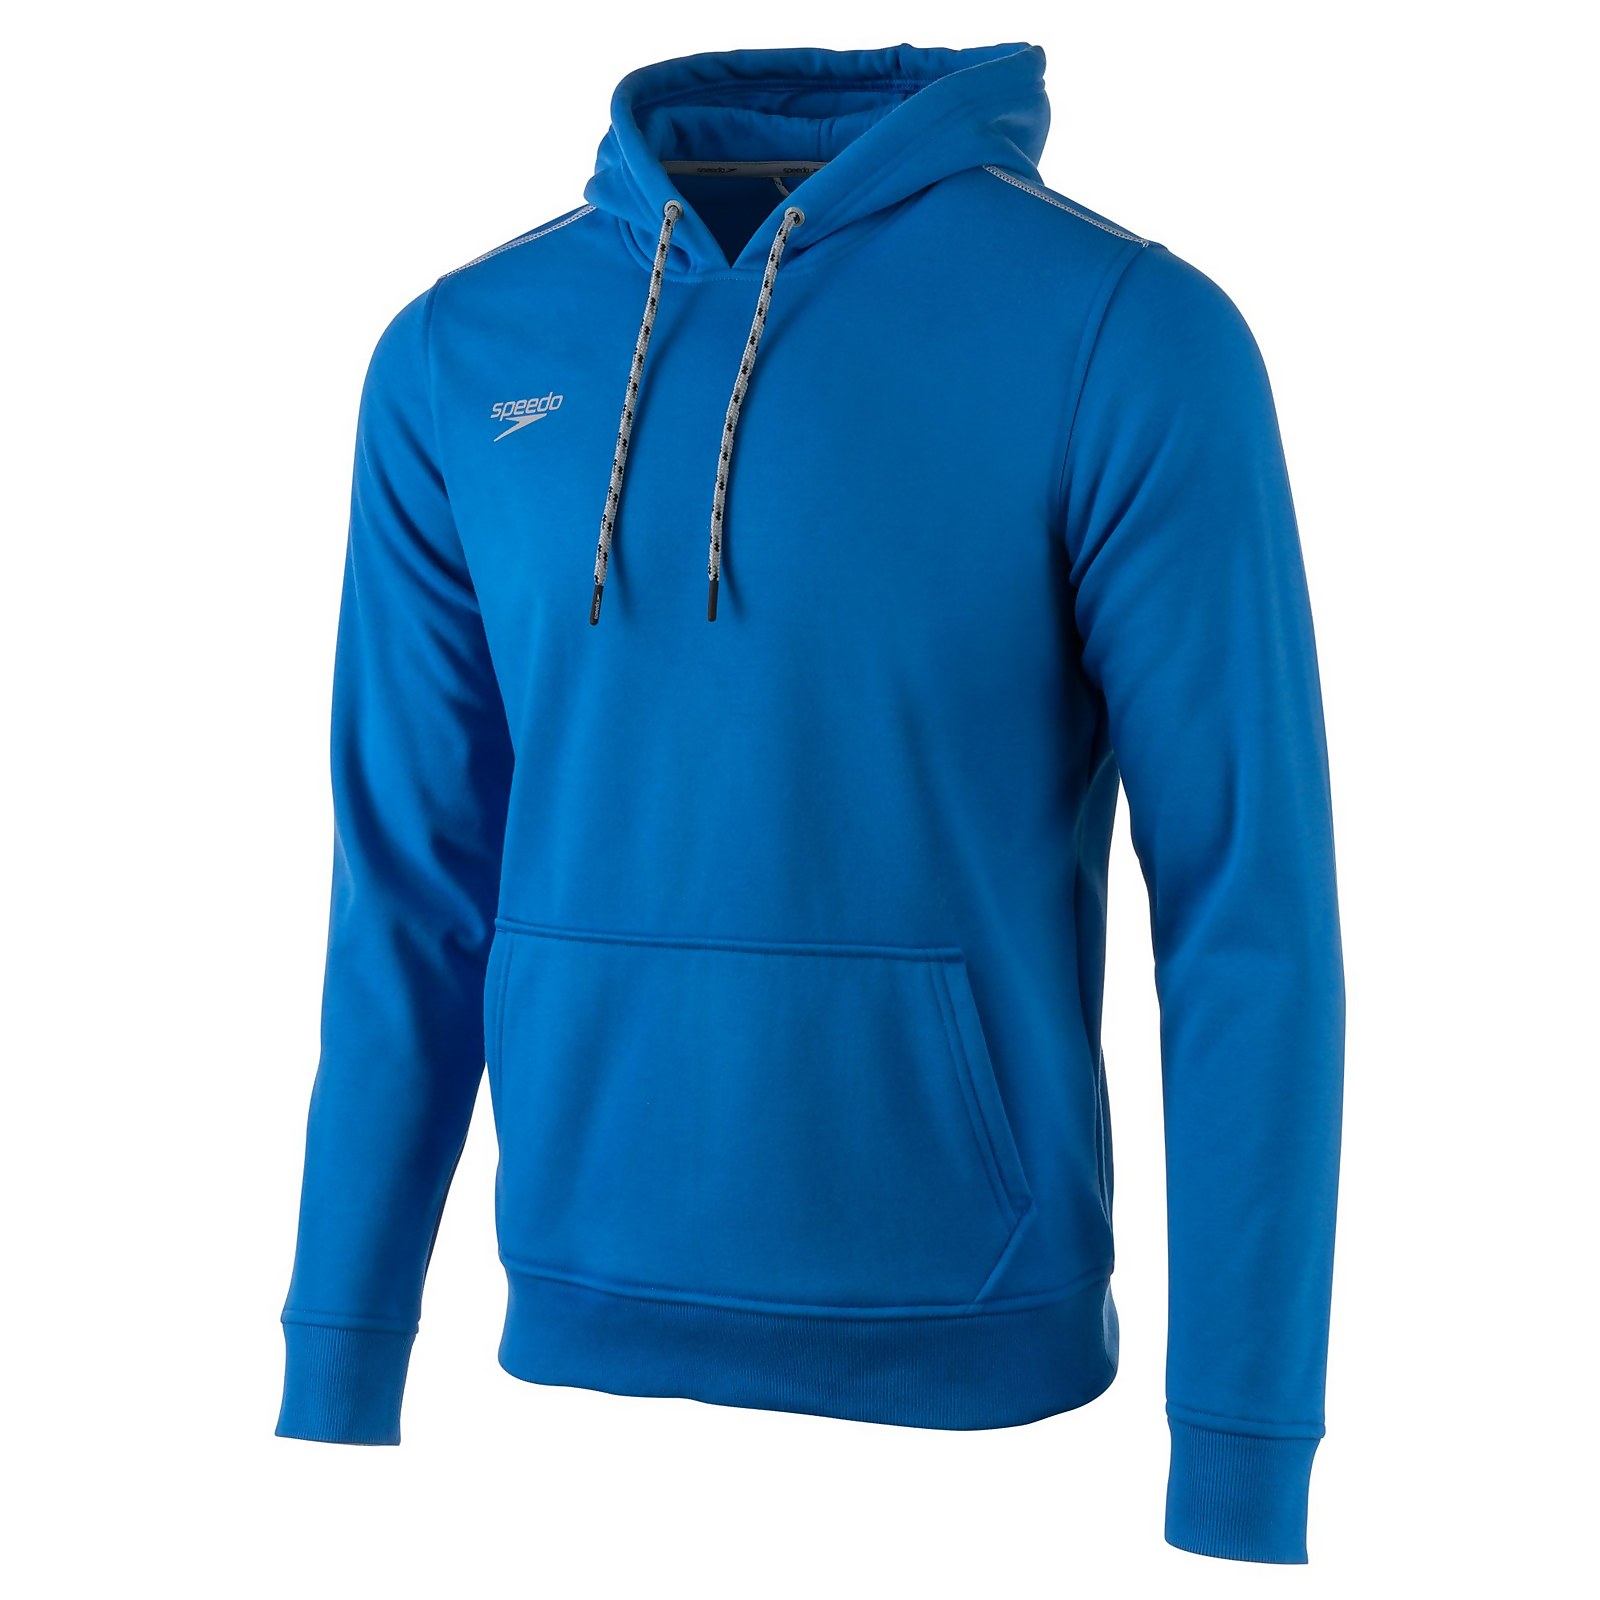 Speedo  Long Sleeve Hooded Sweatshirt - S    : Blue